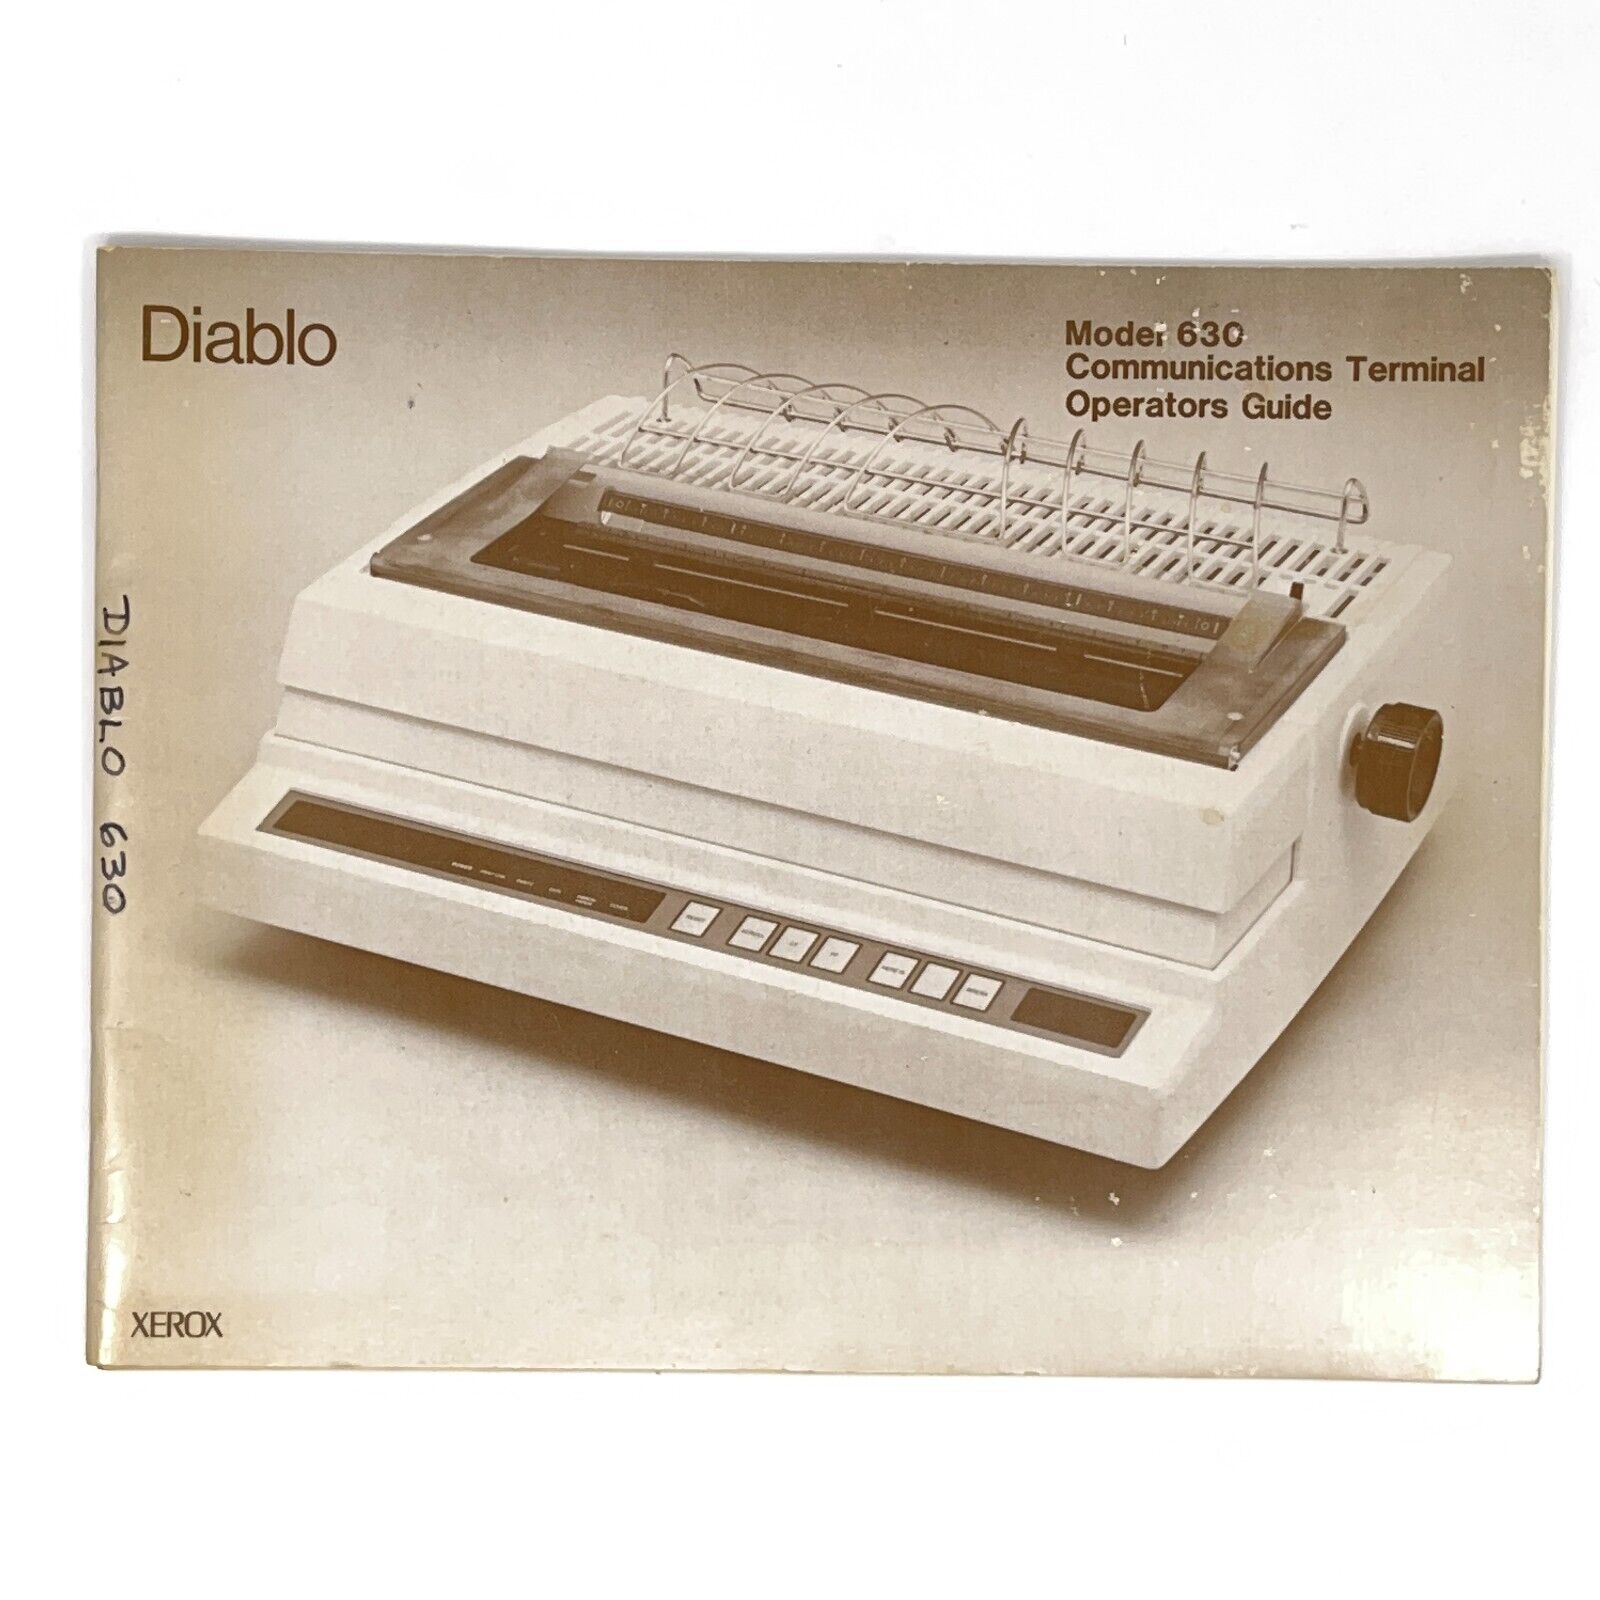 Operators Guide - Xerox Diablo 630 Communications Terminal 1981 90445-02